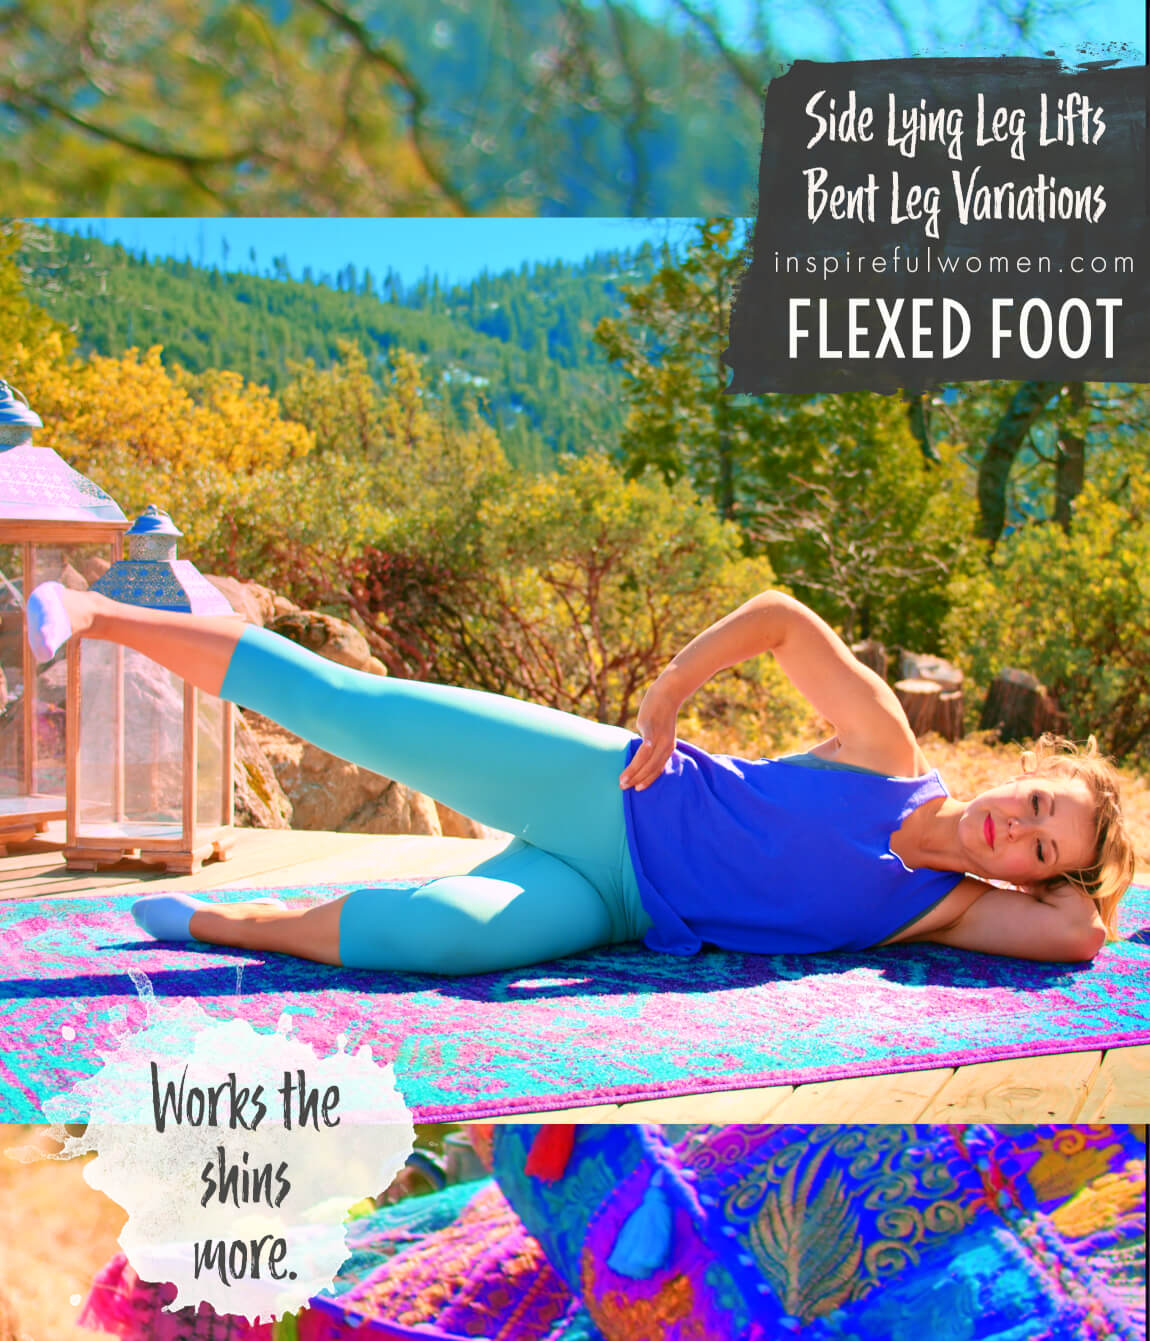 flexed-foot-lying-leg-lifts-bent-leg-shins-glutes-exercise-variation